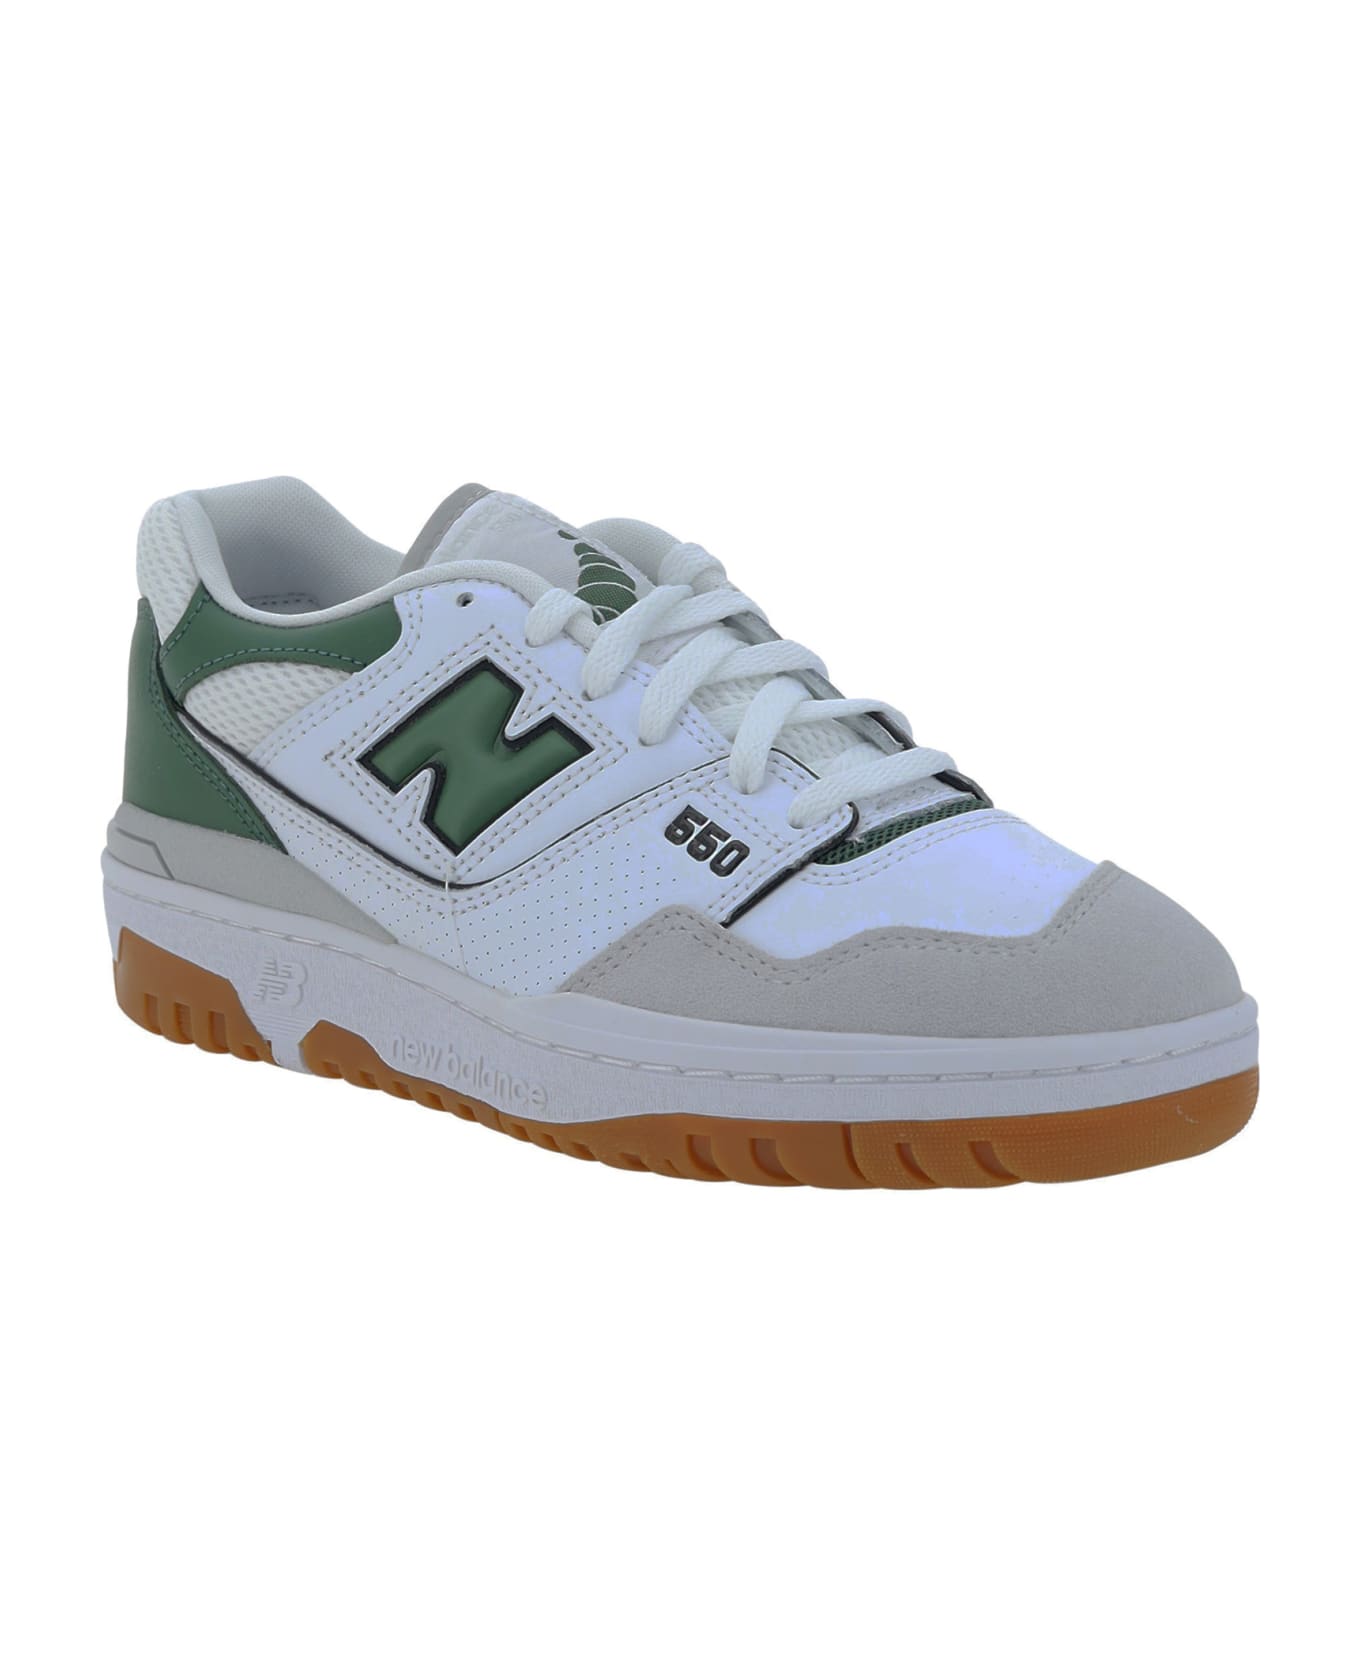 New Balance 550 Sneakers - White/green スニーカー